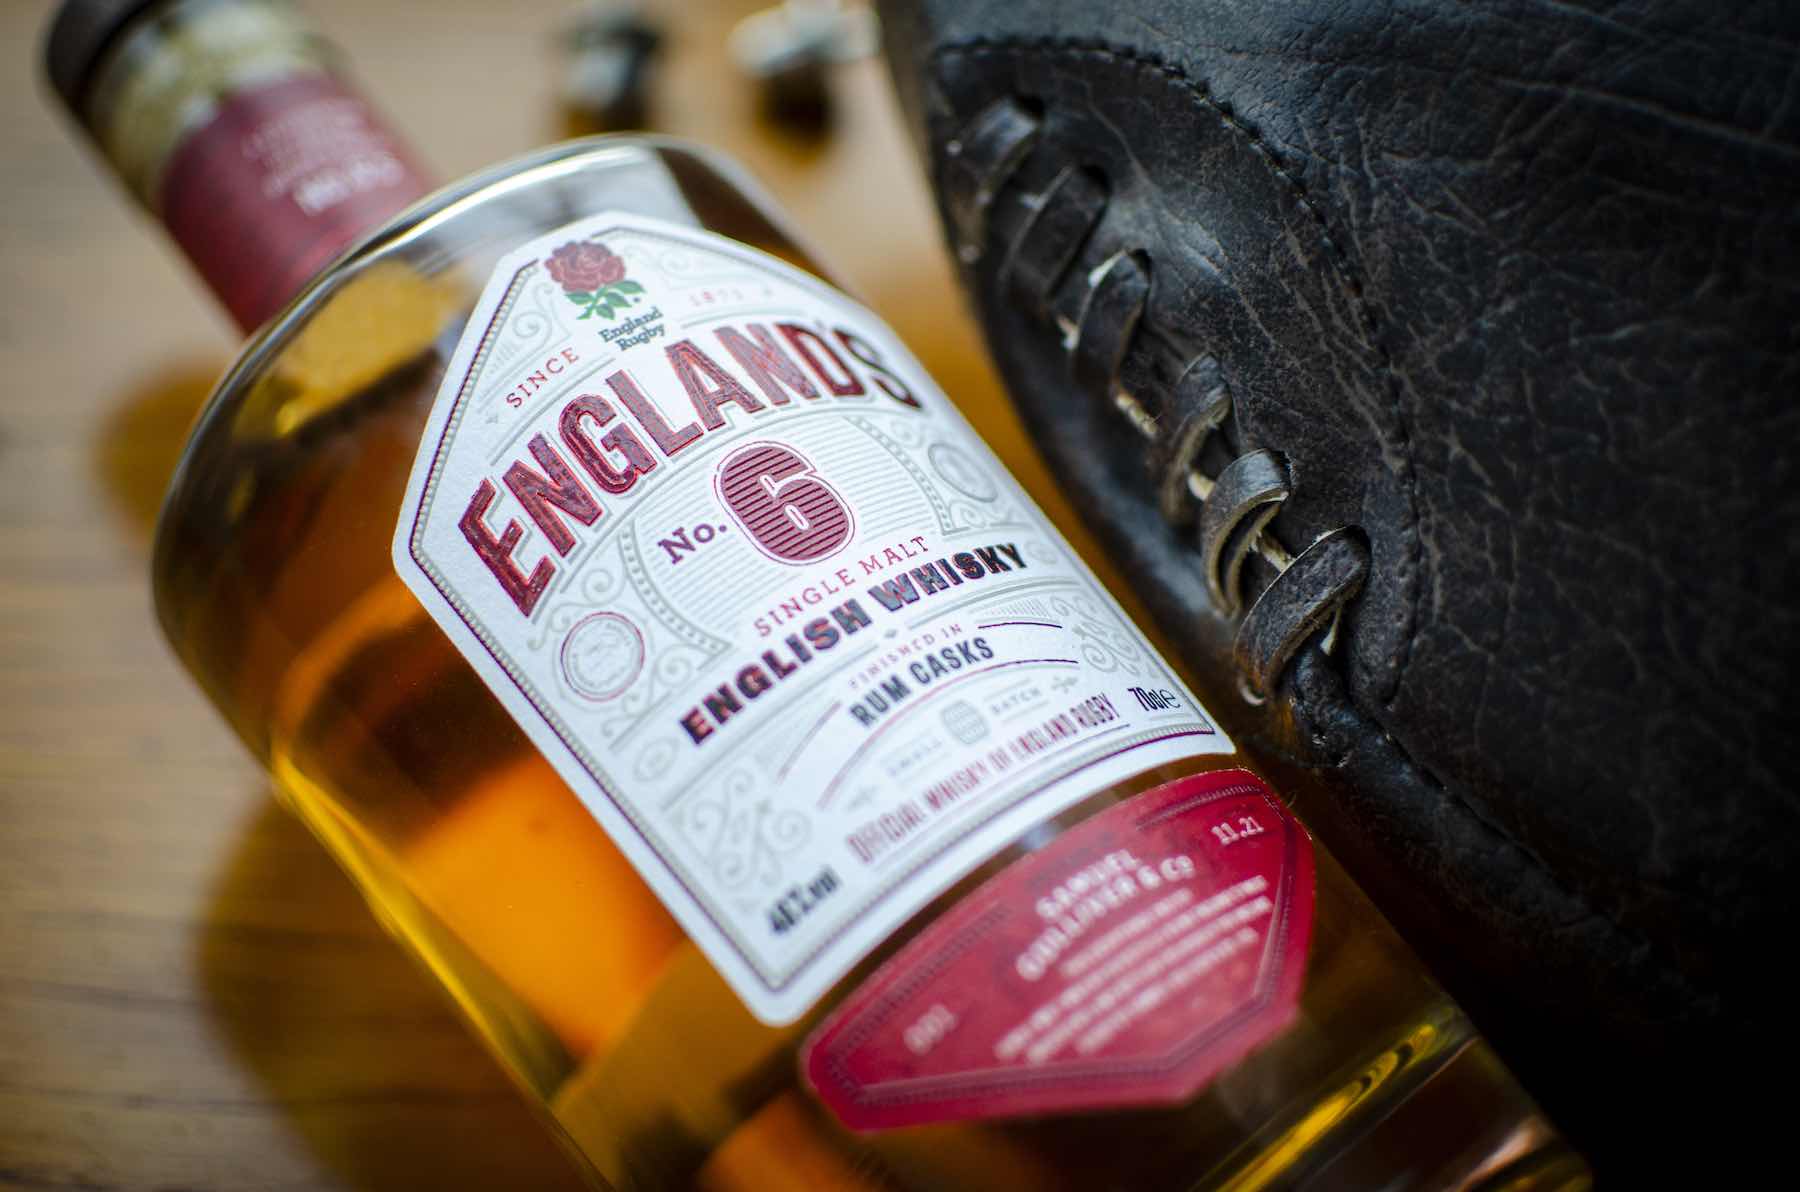 Samuel Gulliver's English Whisky